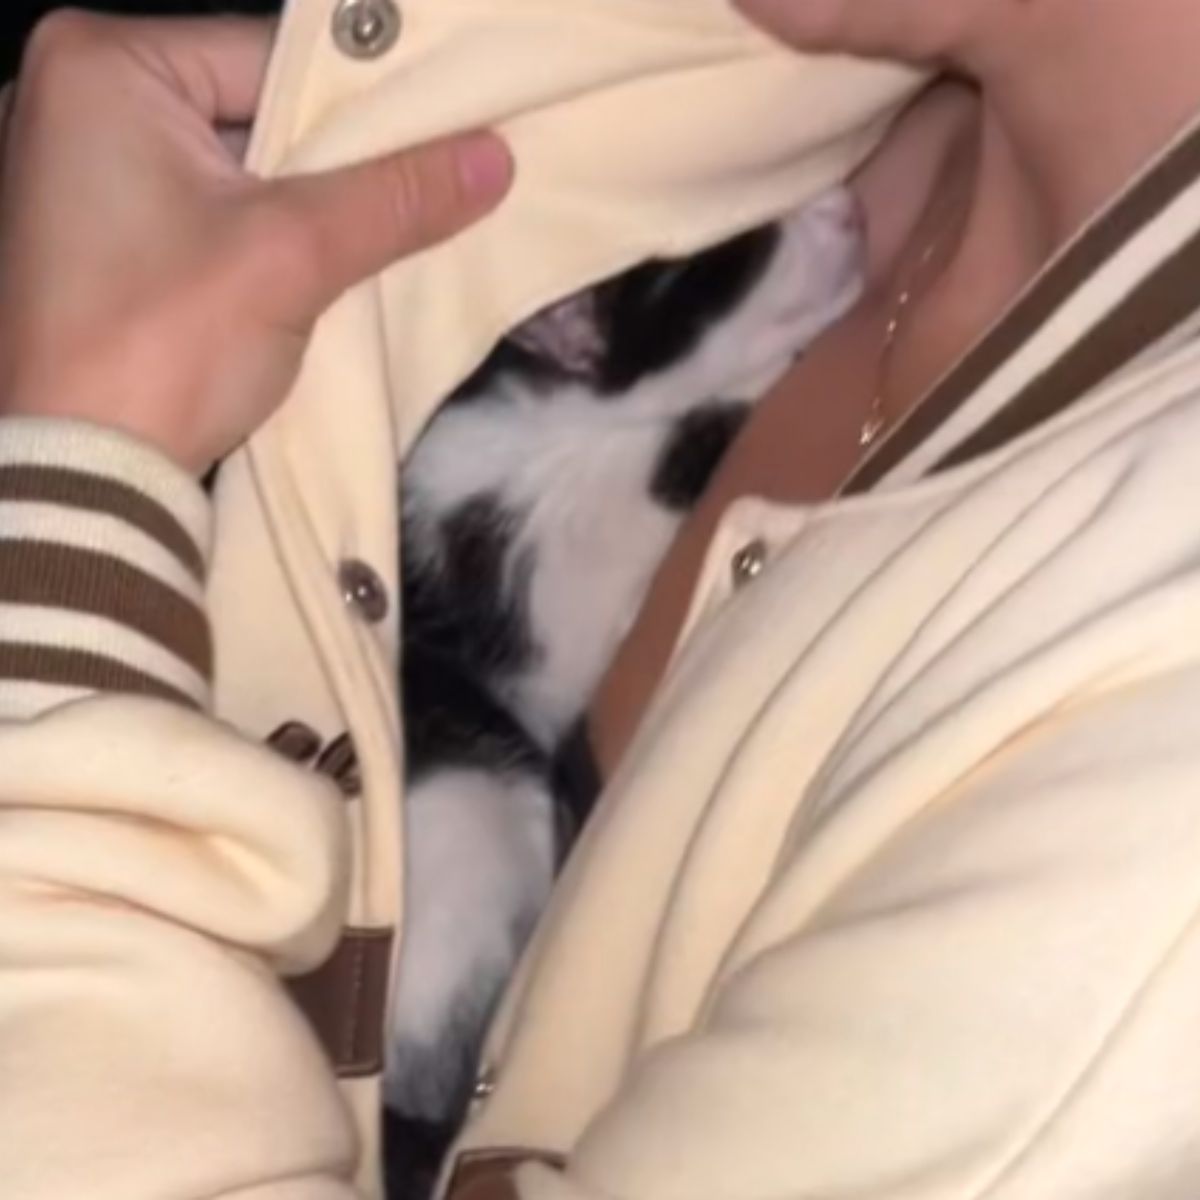 cat under woman's jacket